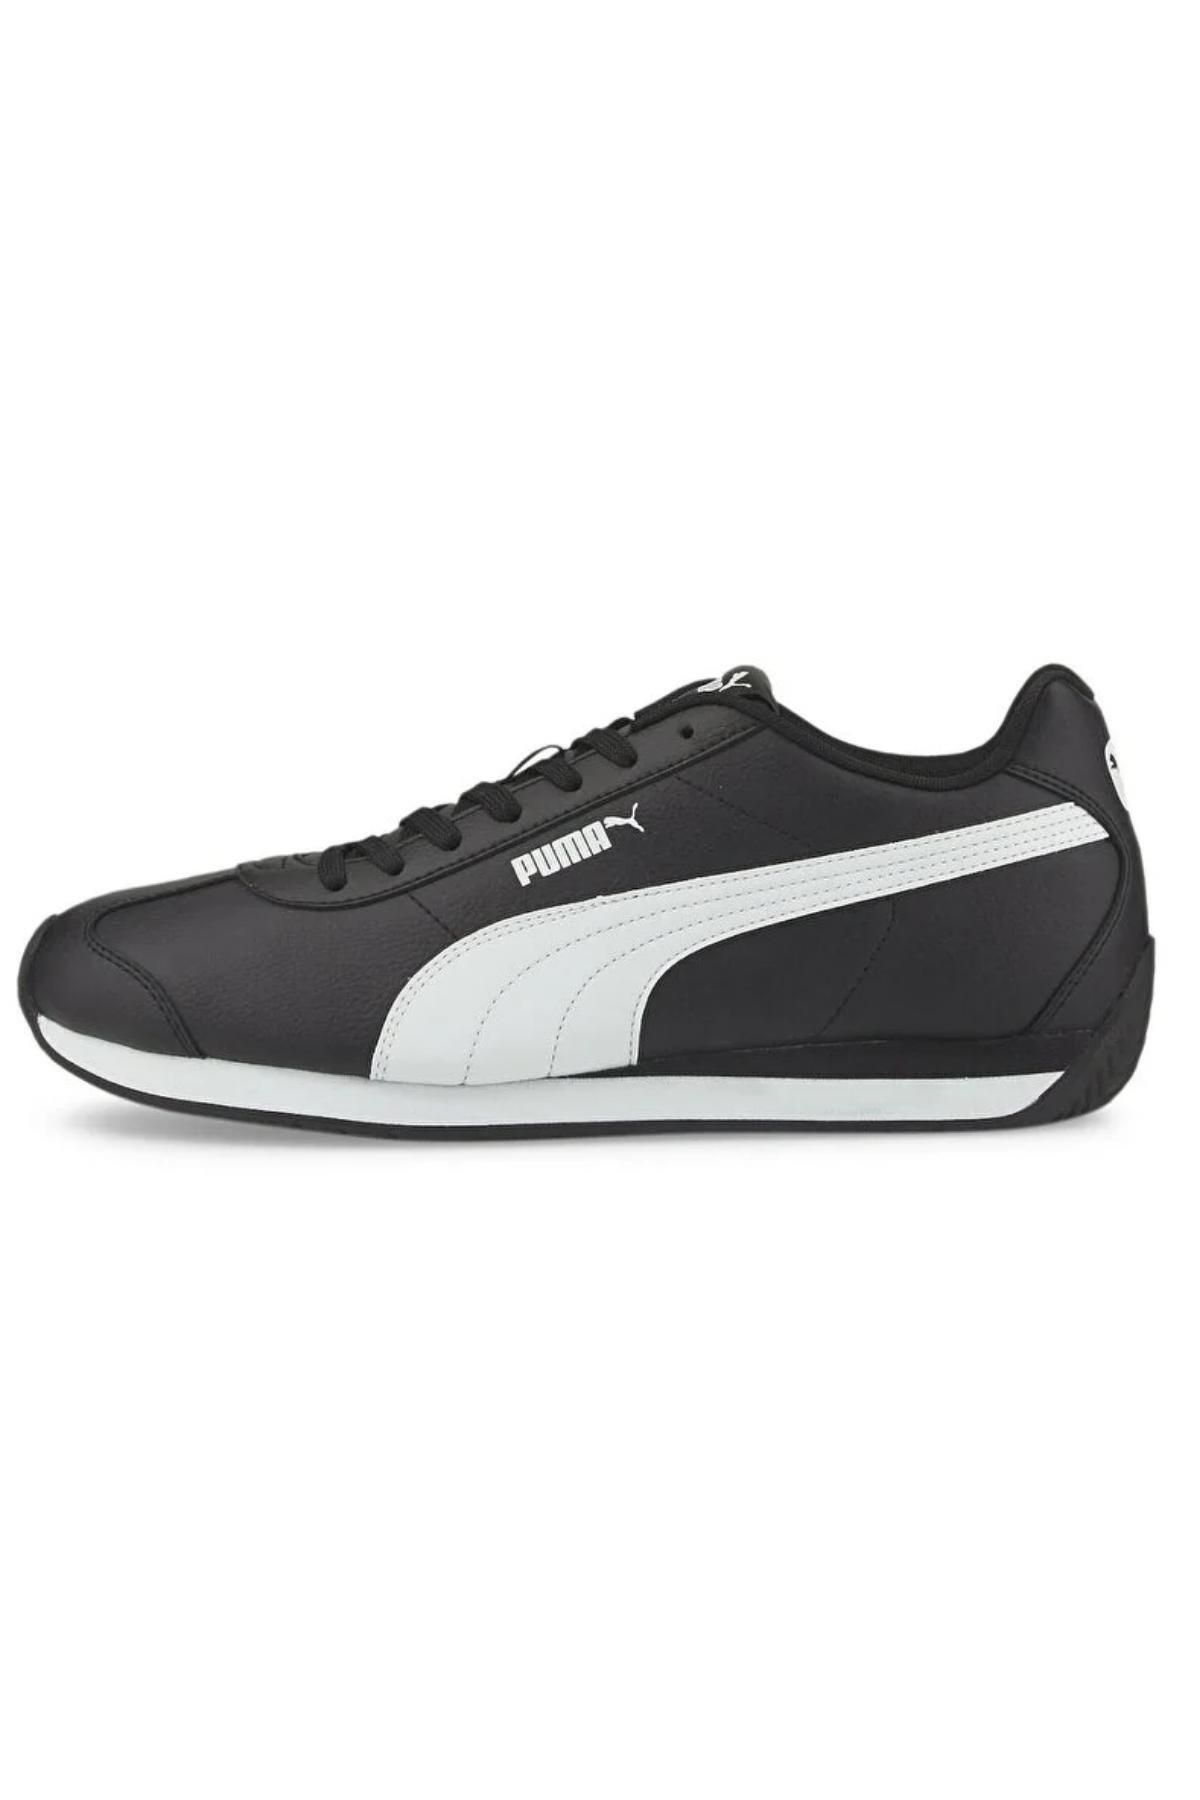 Puma Siyah-beyaz Puma Turin 3 Günlük Spor Ayakkabı Vo38303705